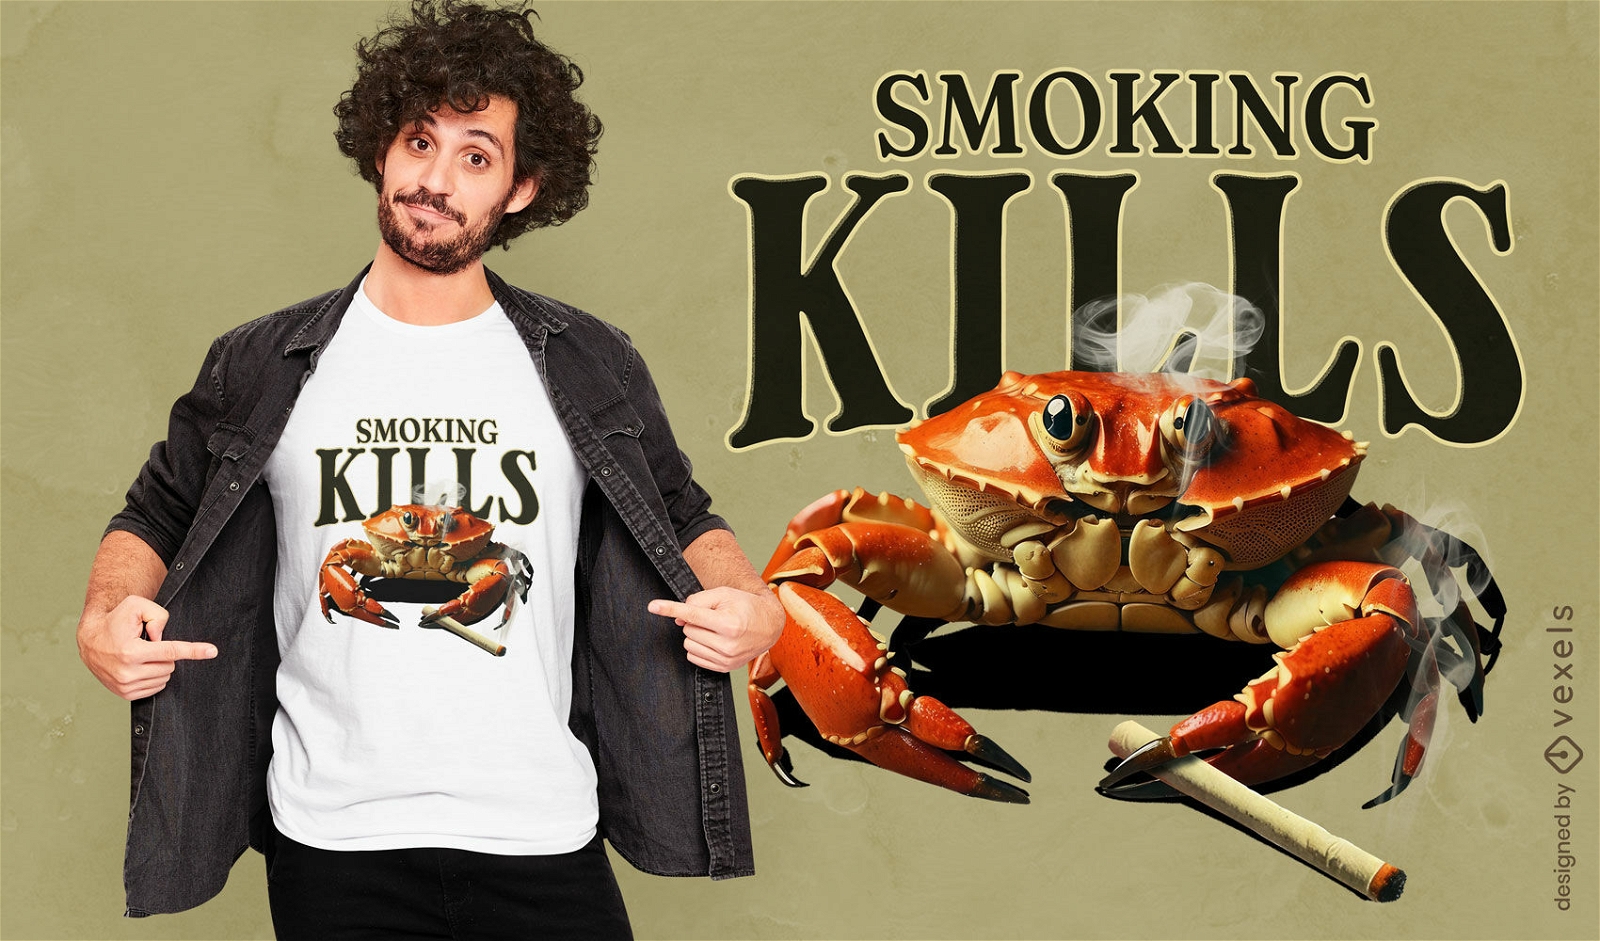 Diseño de camiseta sarcástica para fumar cangrejo.